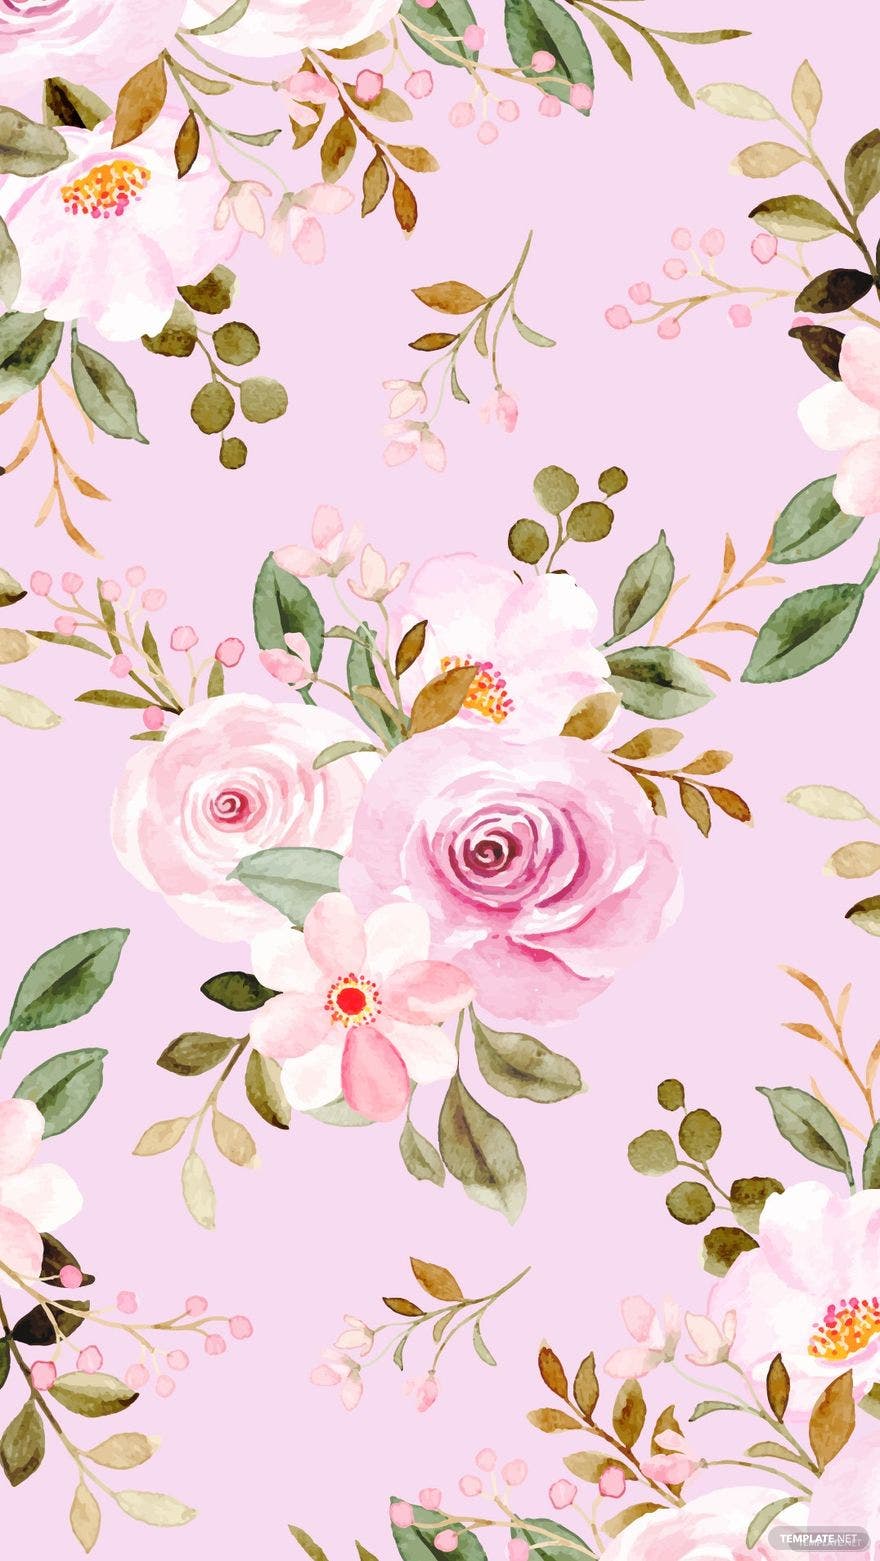 Free Flower iPhone Background, Illustrator, JPG, SVG